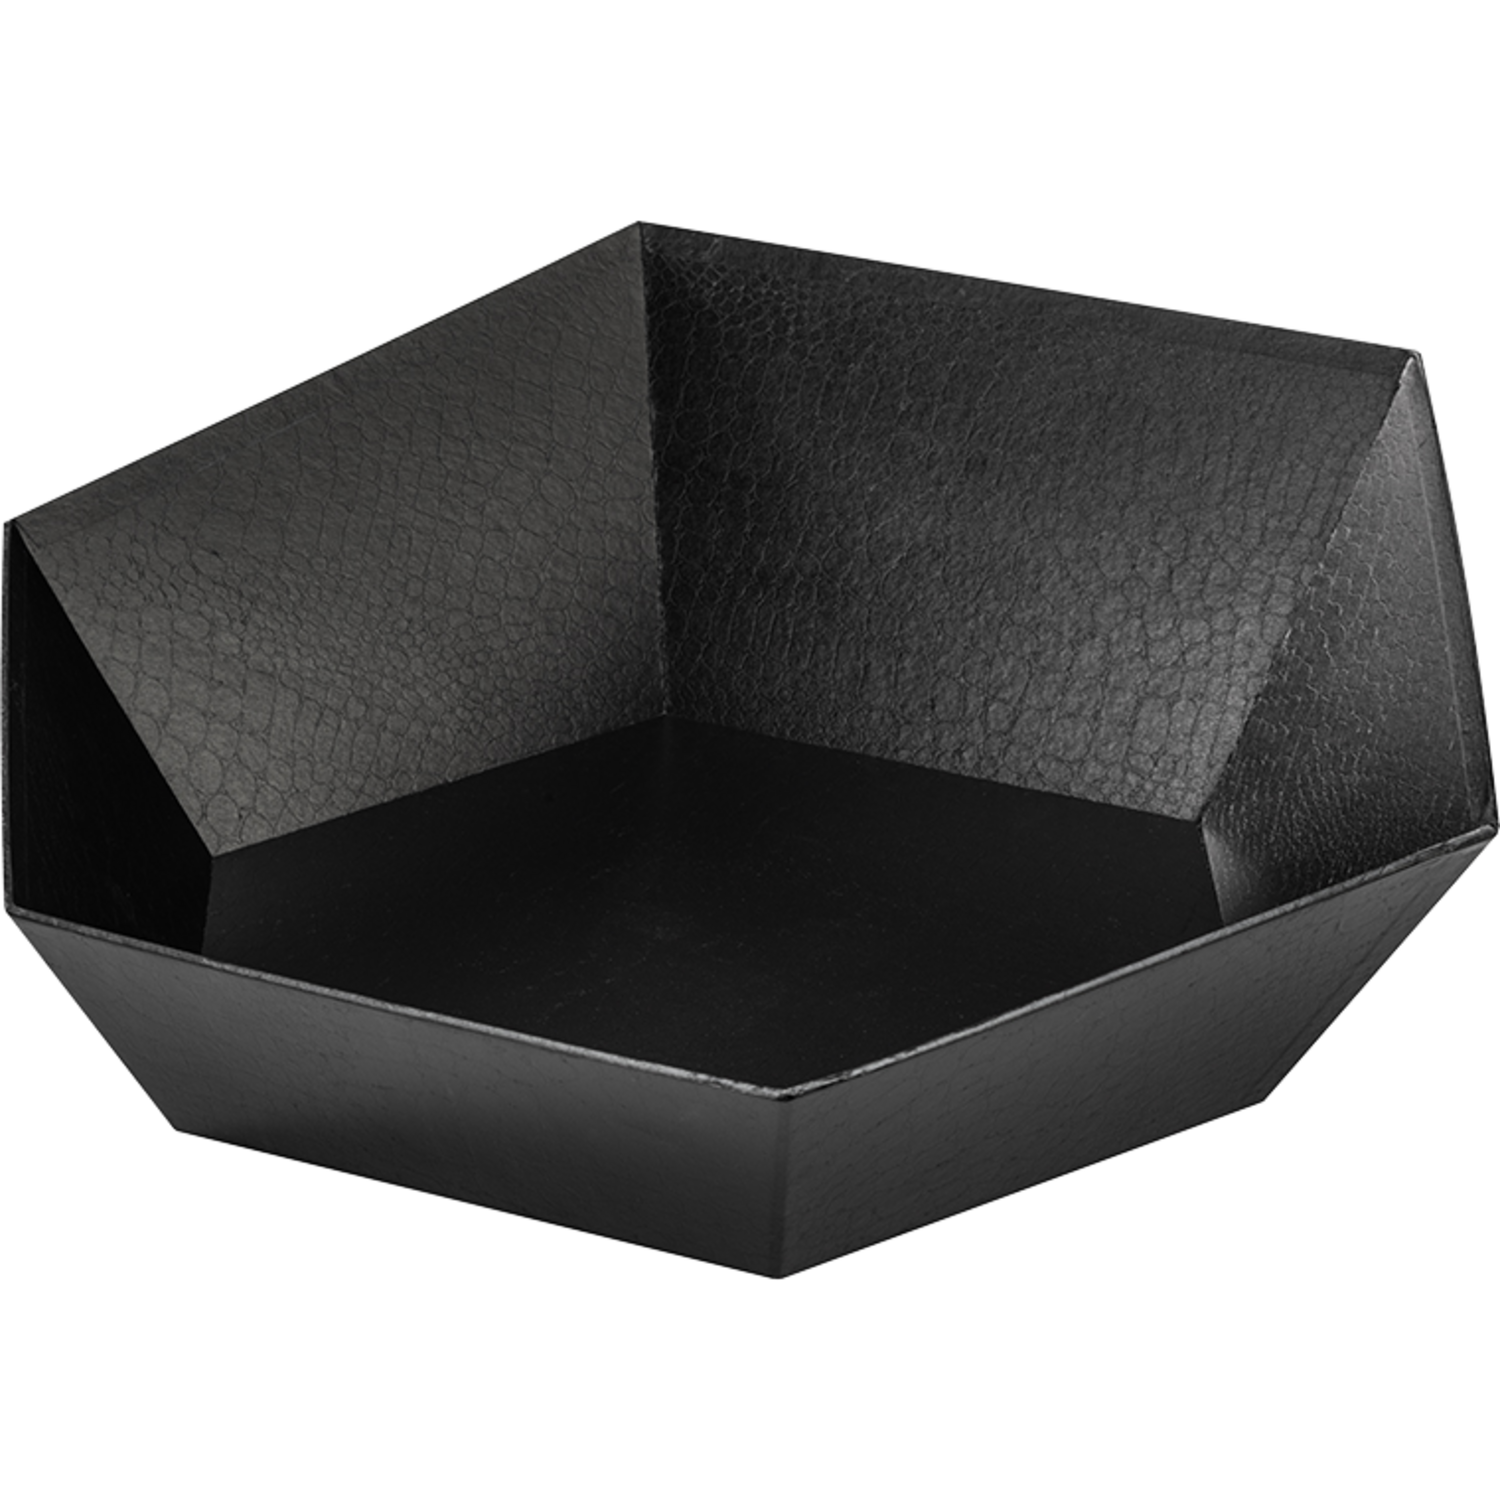 Plat, karton, hexagonal, 41.5x46.5cm, leatherlook, noir 1